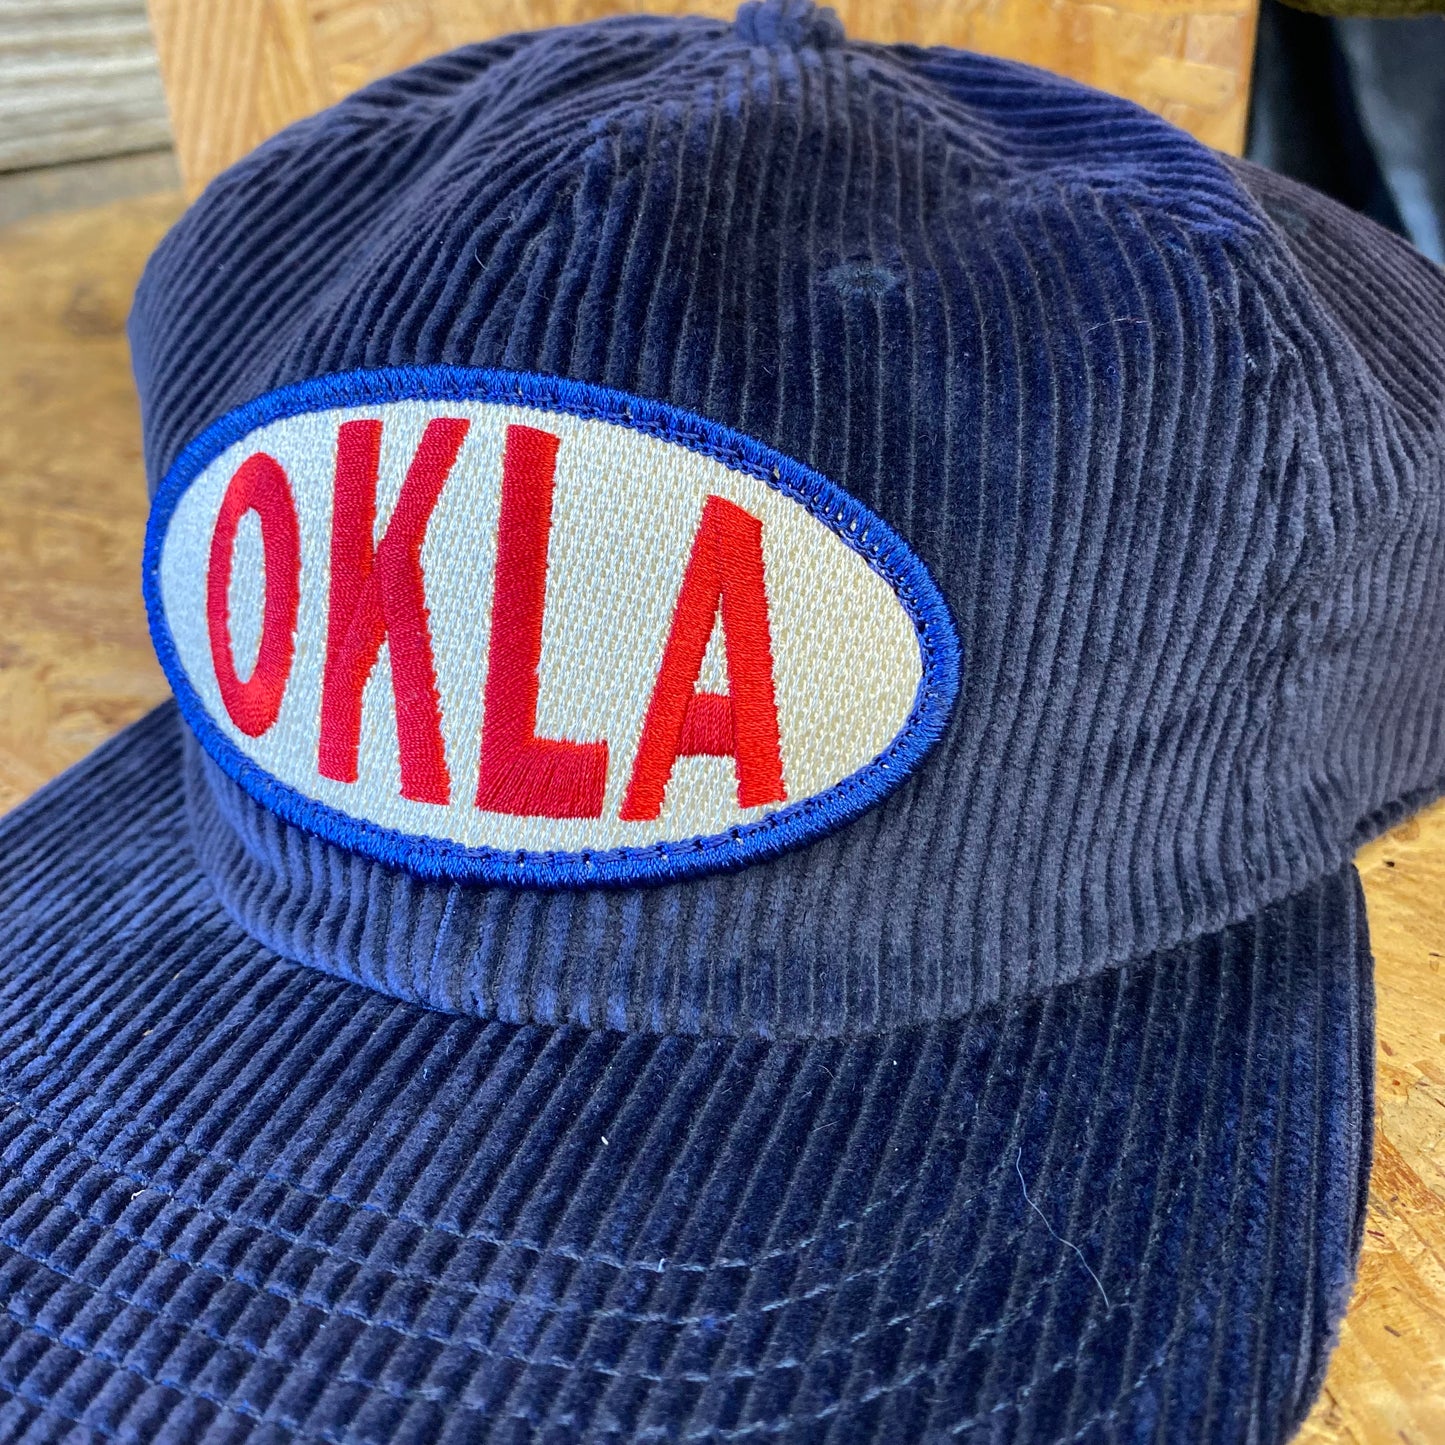 Circle OKLA Hat - Navy Cord Hat